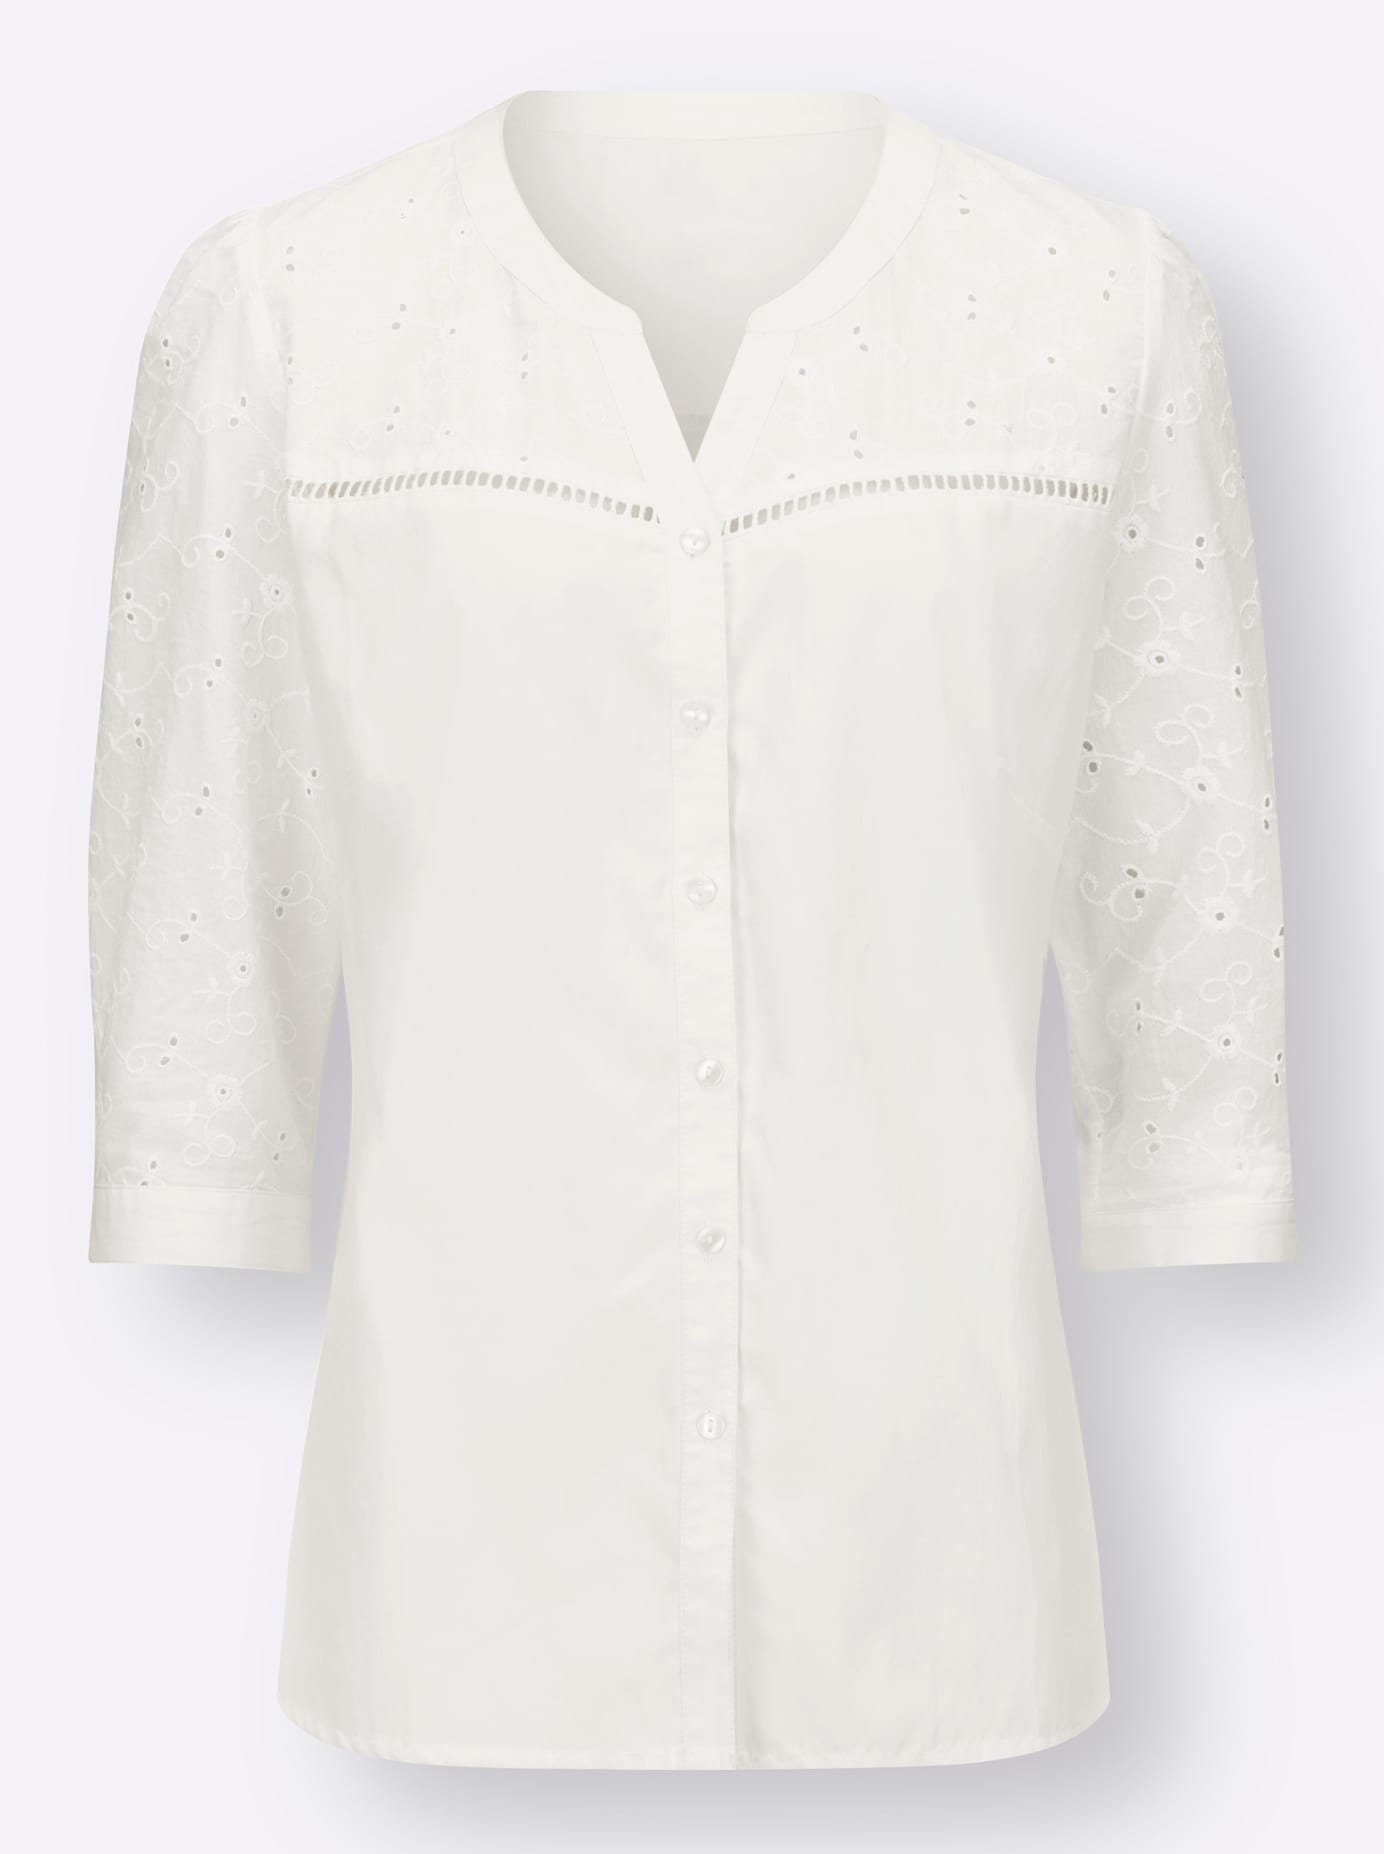 Classic Basics Klassieke blouse